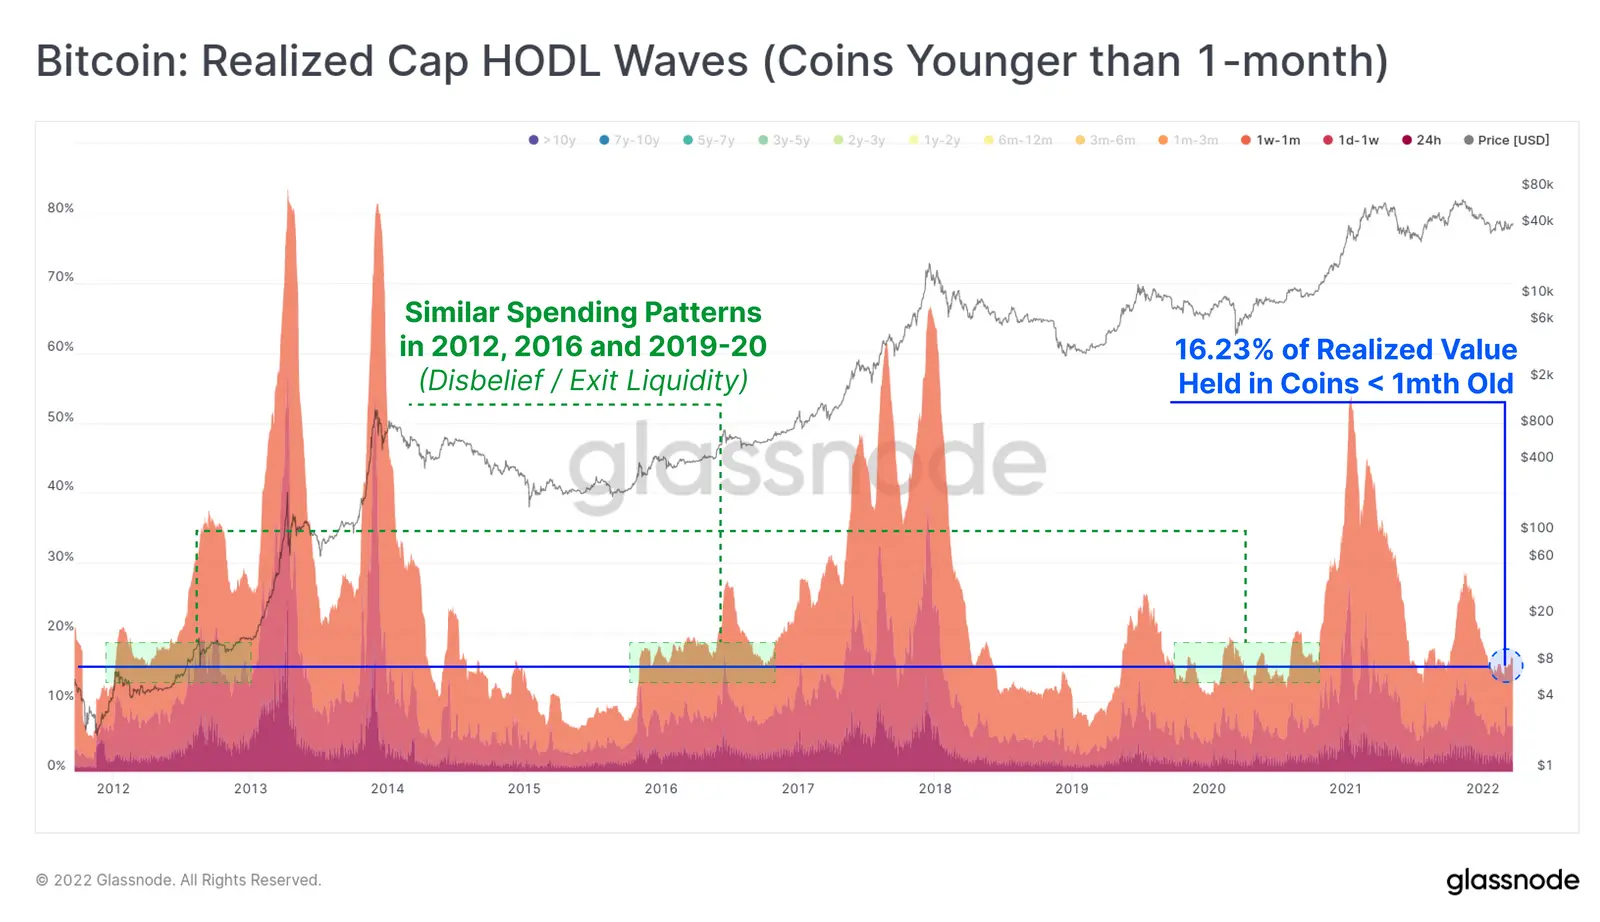 Bitcoin Realized Cap HODL Waves - Grafik